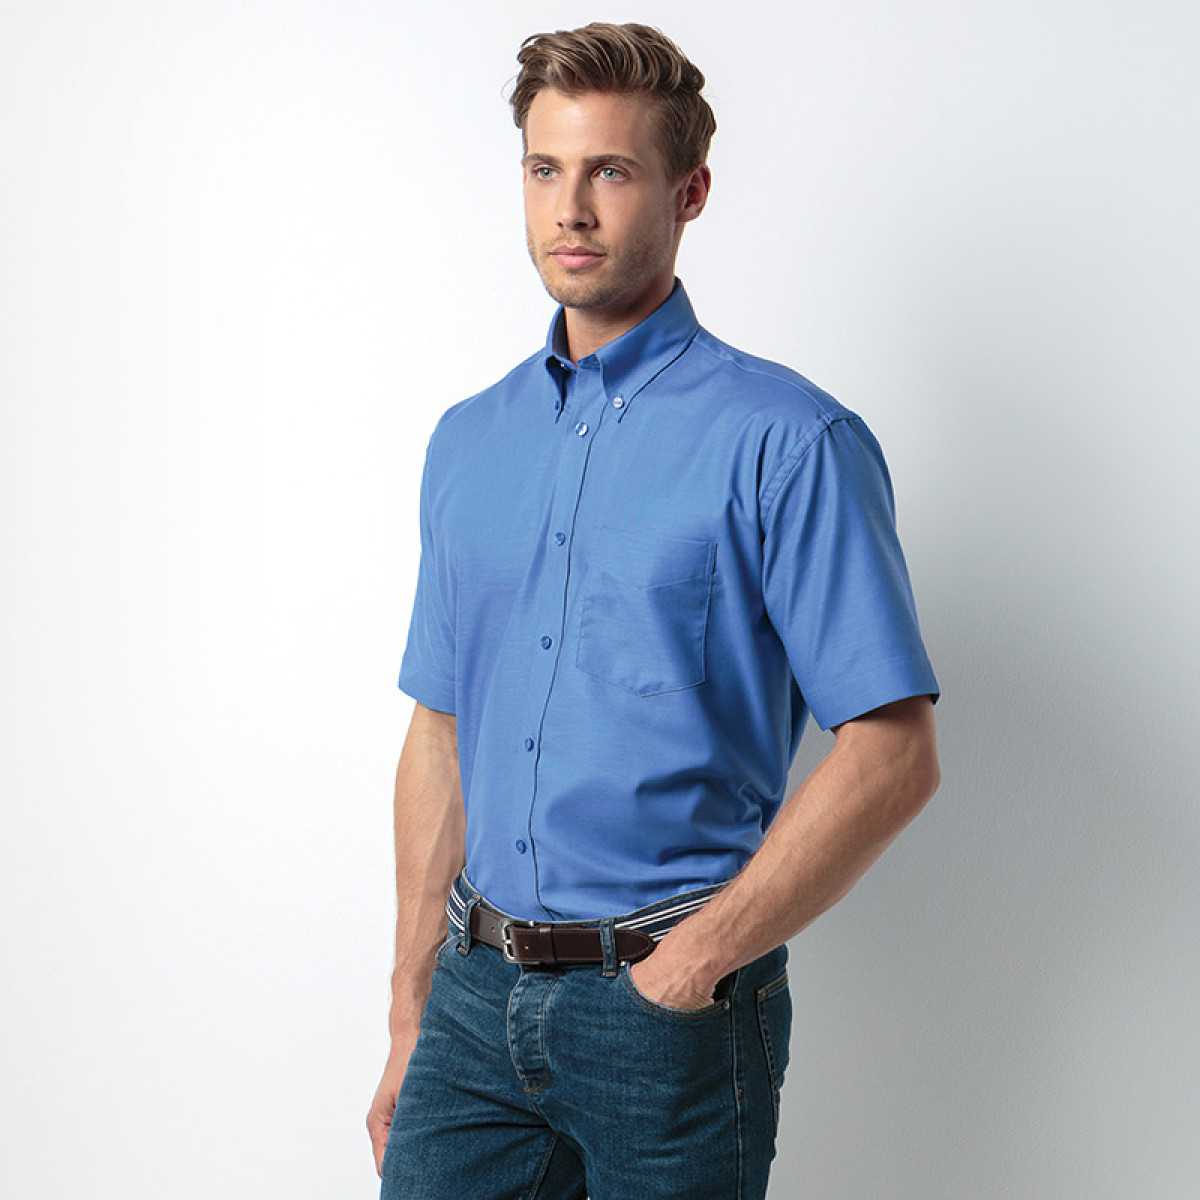 mens Workplace Oxford short sleeved Shirt (RWKK350)